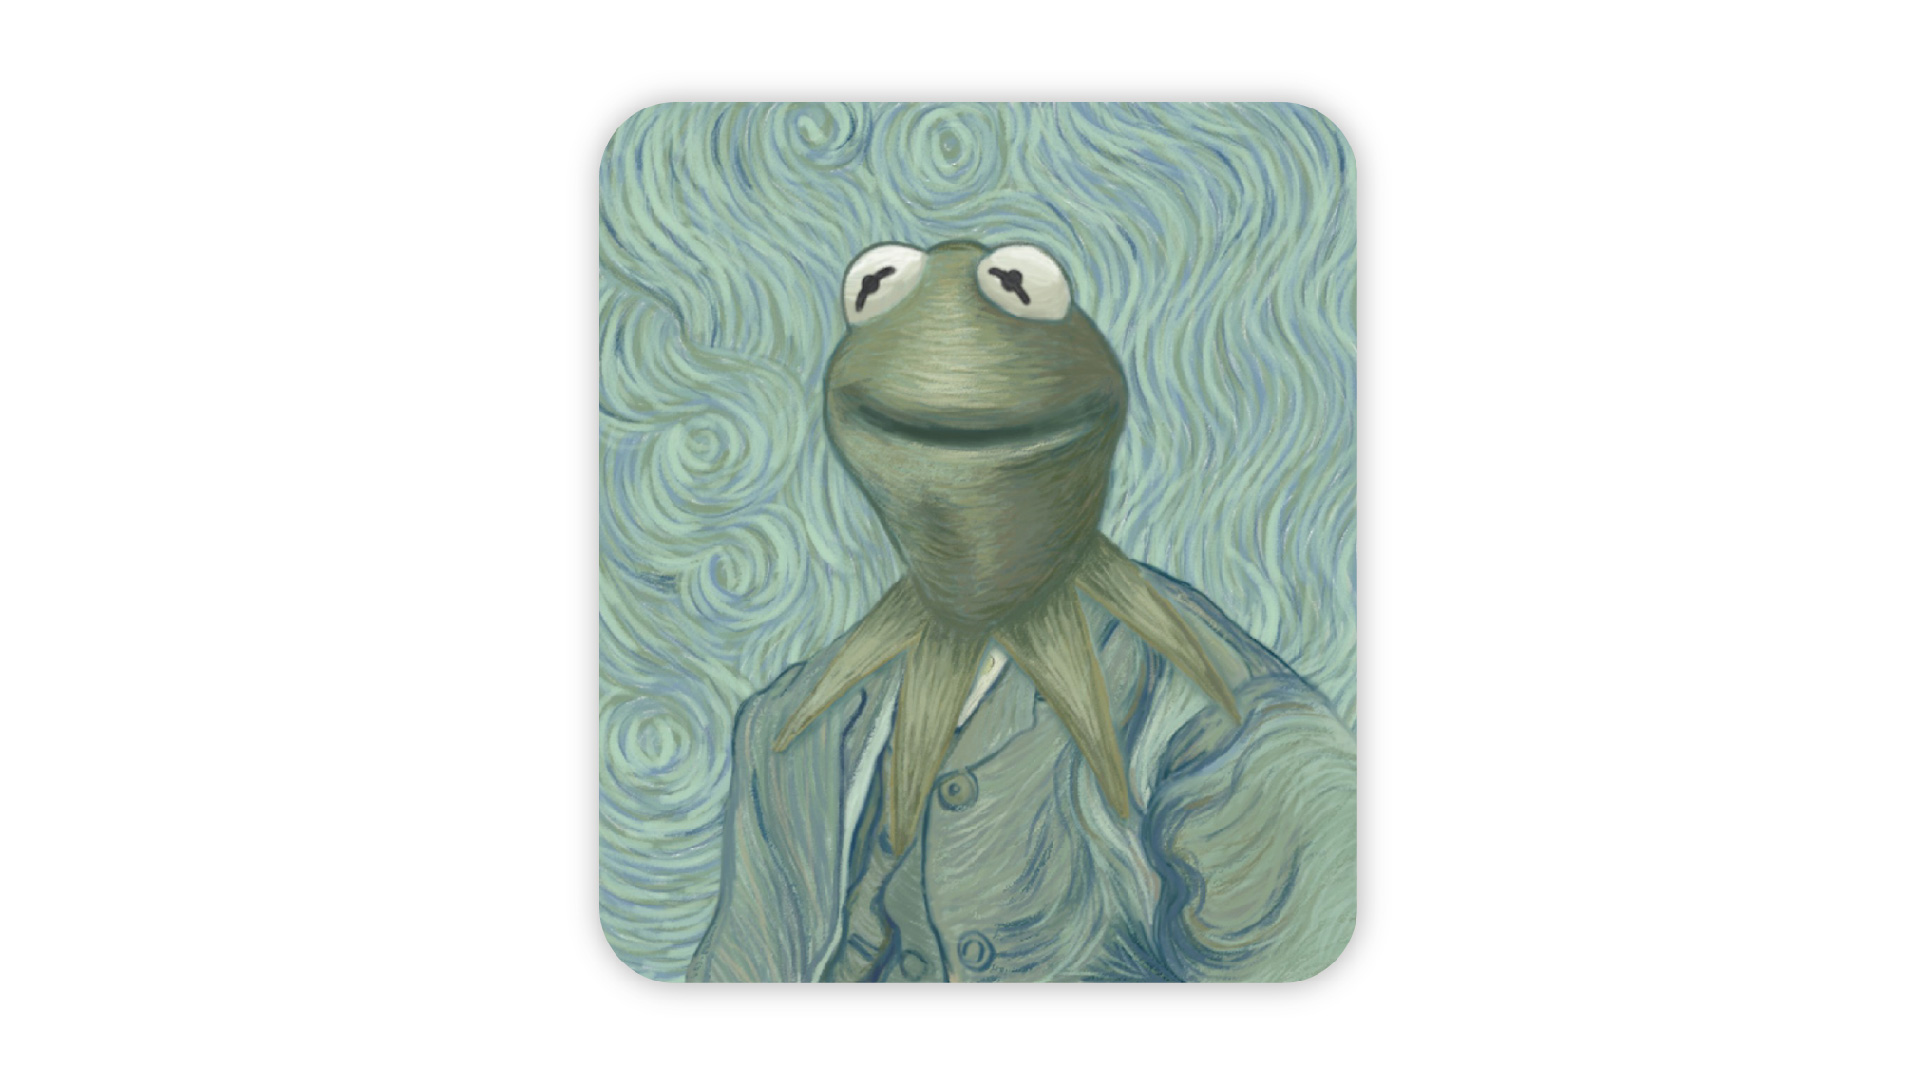  / “Van-Kermit,” digital painting, 8.5x10 inch print, 2019. Digital adaptation of Vincent van Gogh’s 1889 self-portrait 